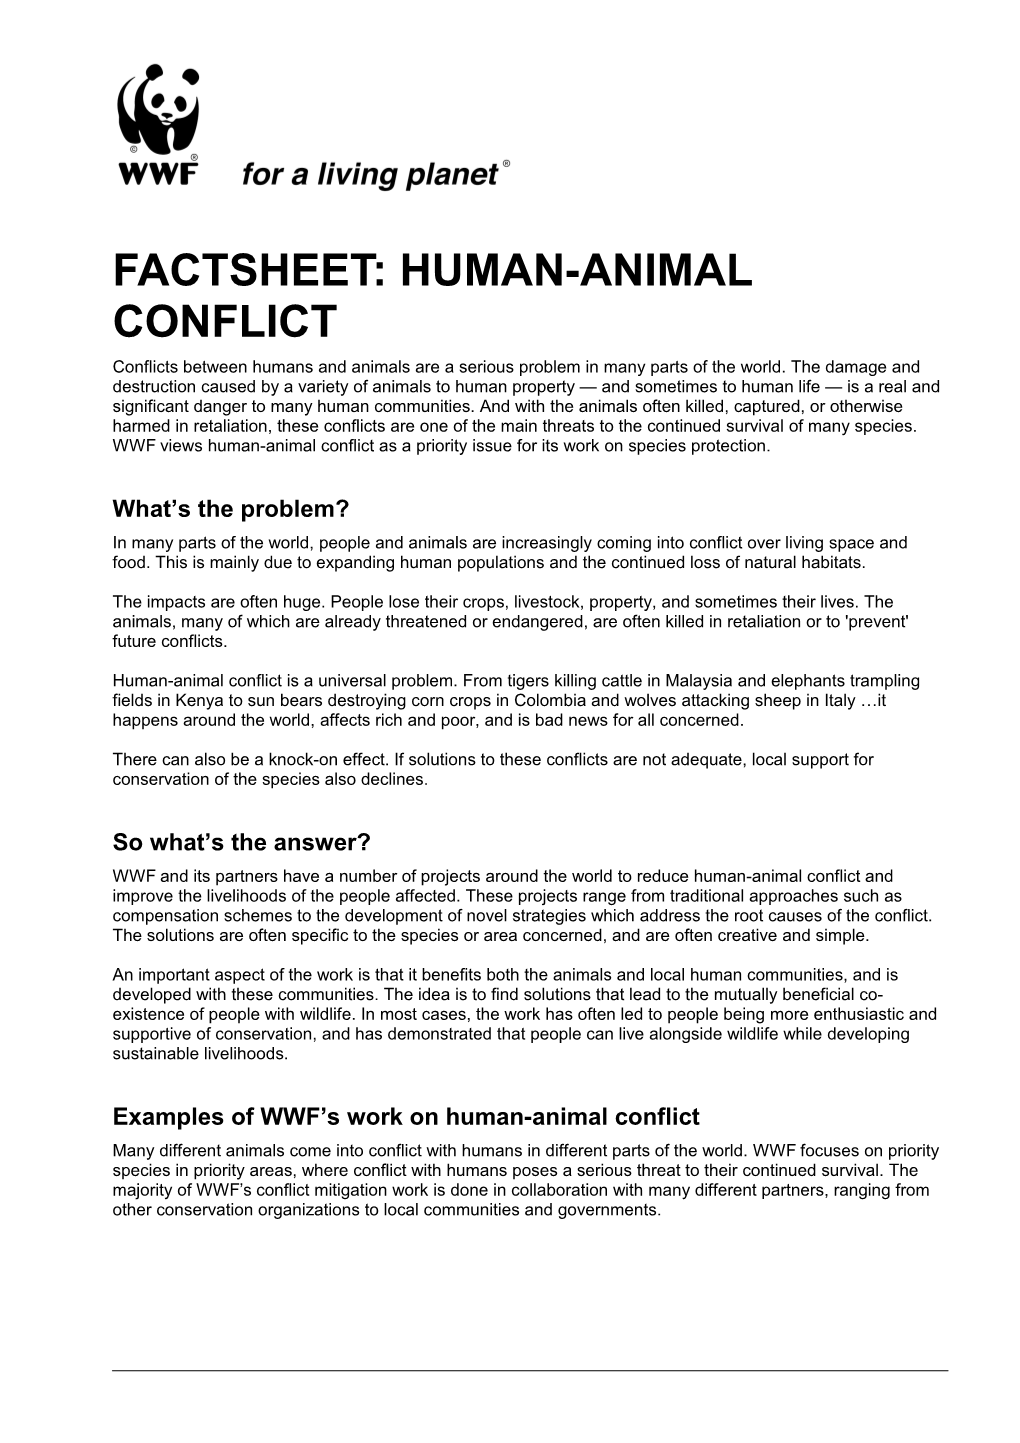 FACTSHEET: Human-Animal Conflict